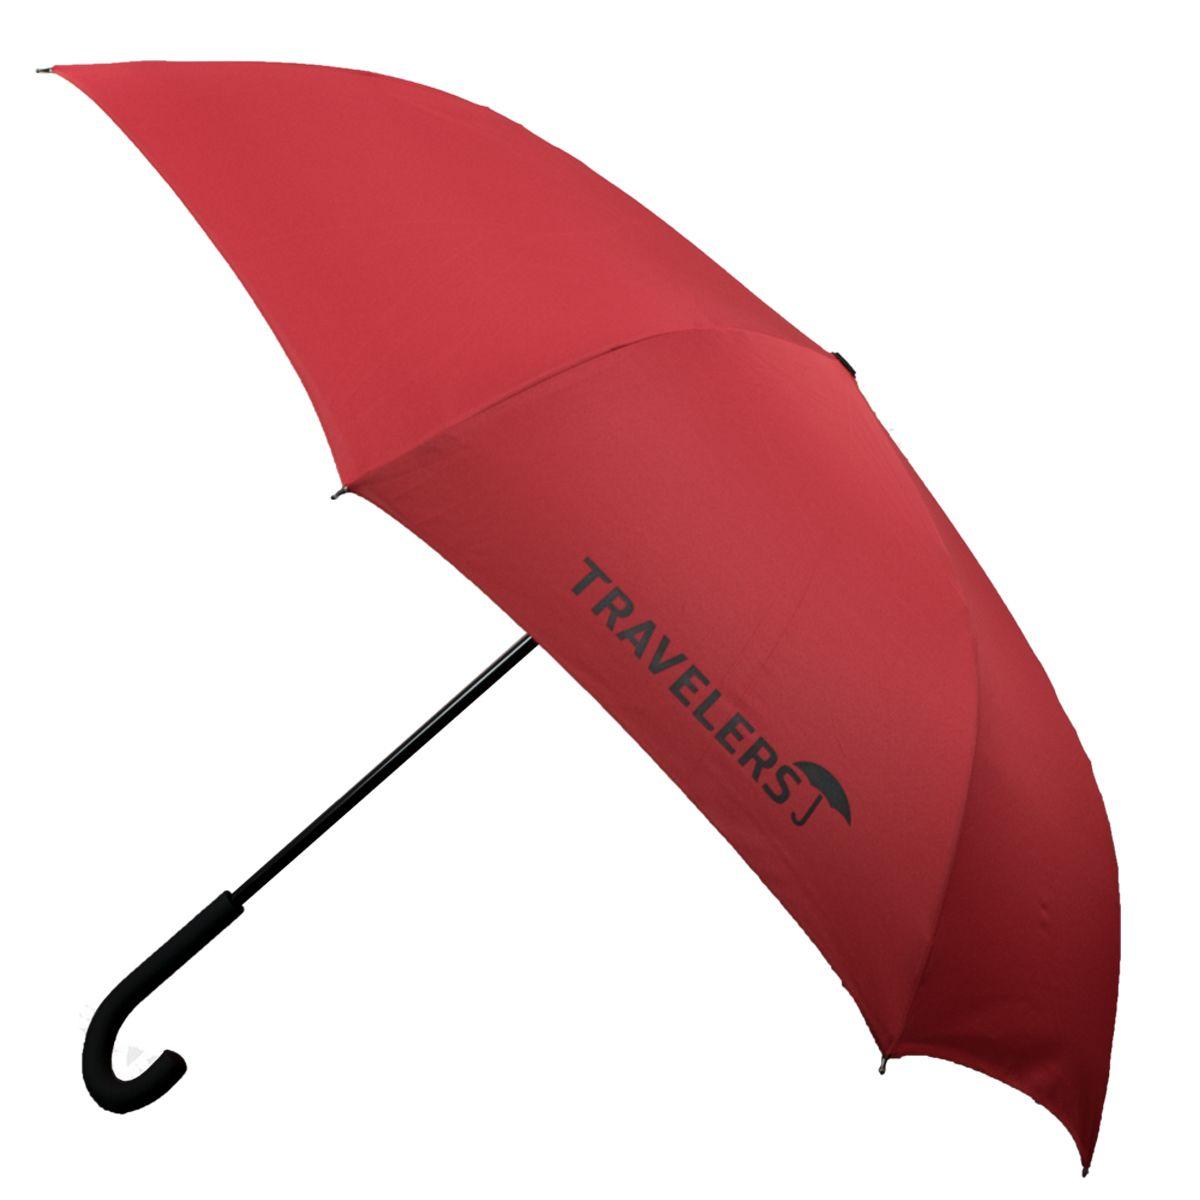 Travelers Insurance Umbrella Logo - Travelers Online Store